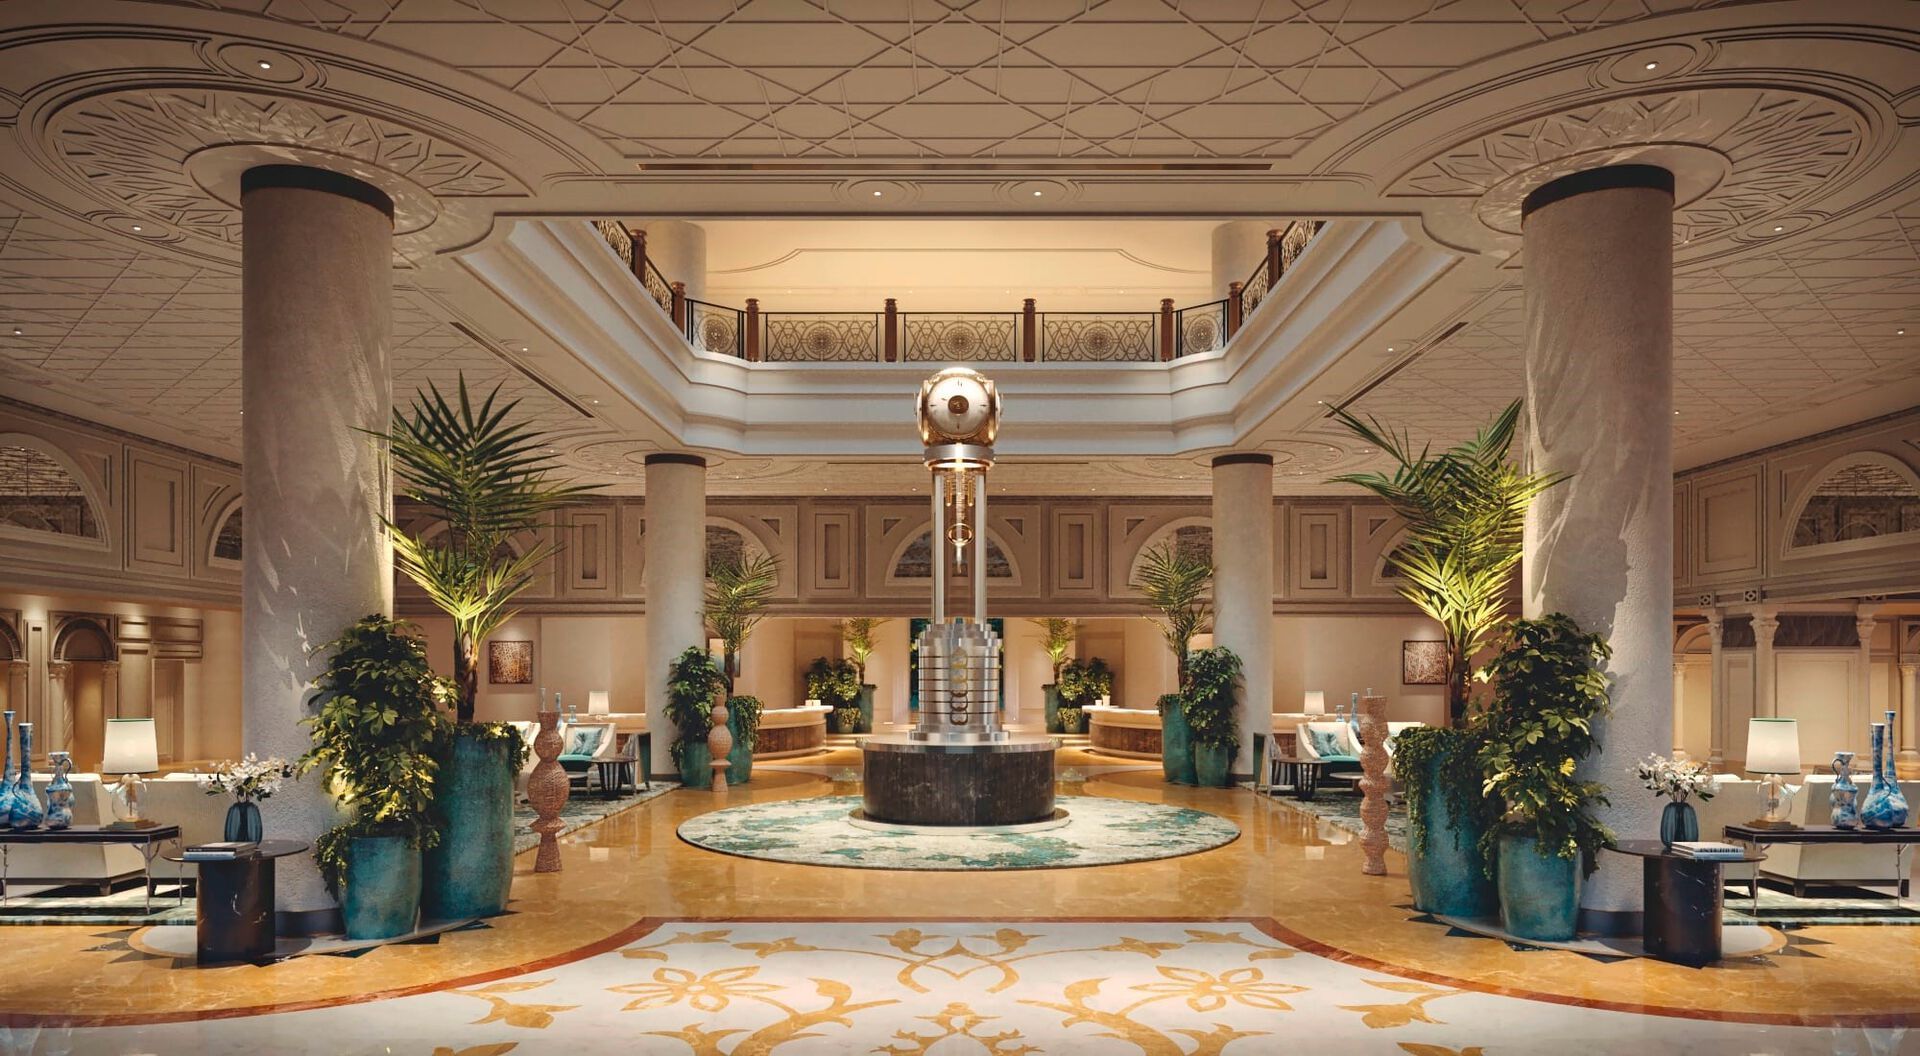 Emirats Arabes Unis - Hôtel Waldorf Astoria Ras Al Khaimah 5*